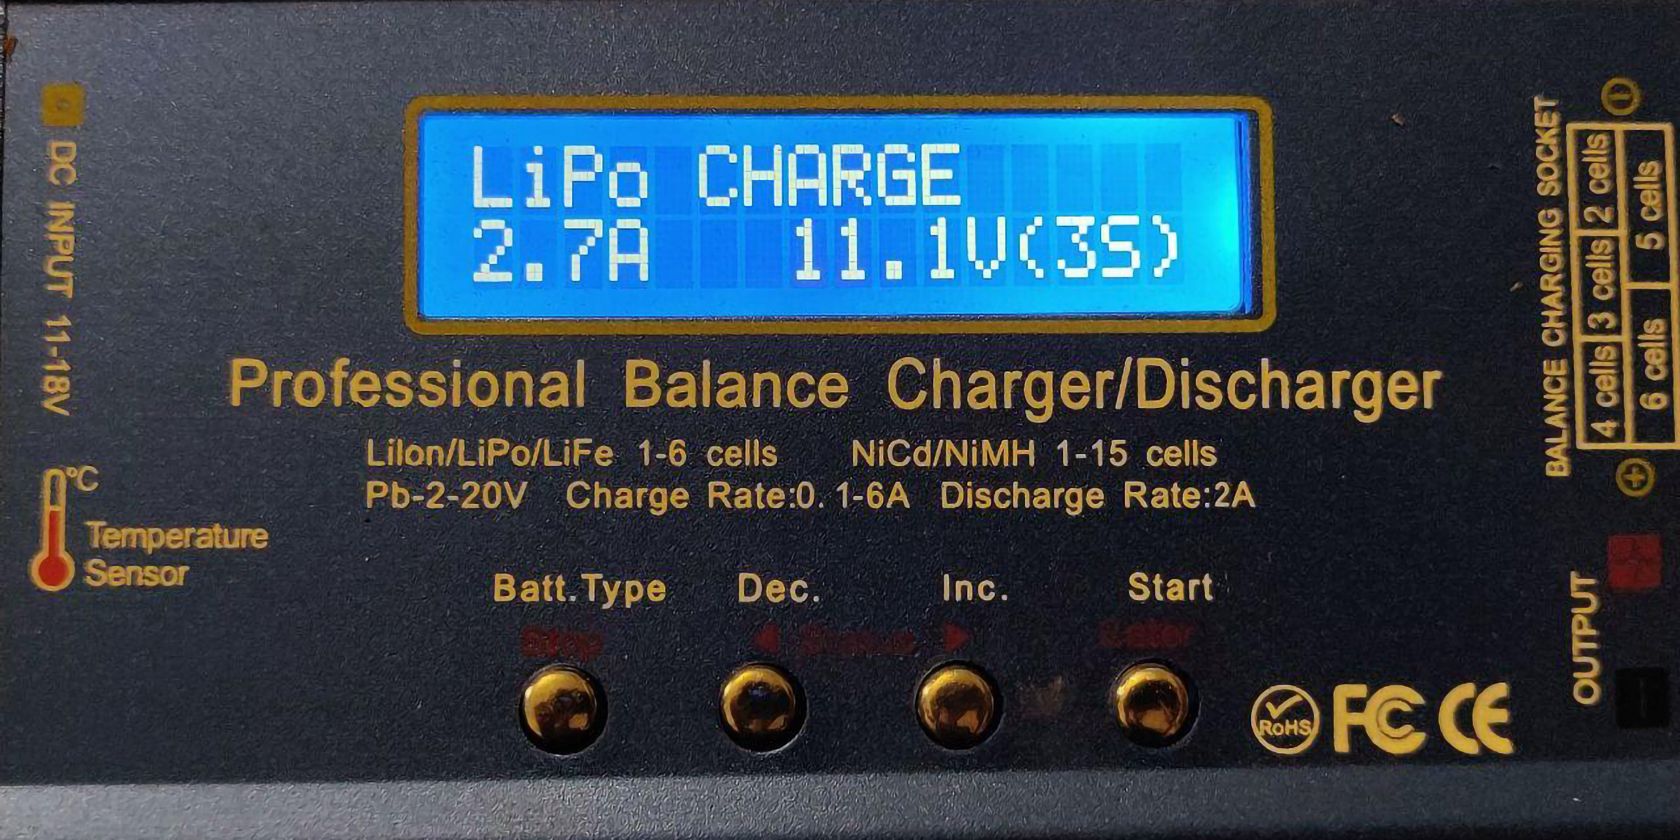 The basic charge setting